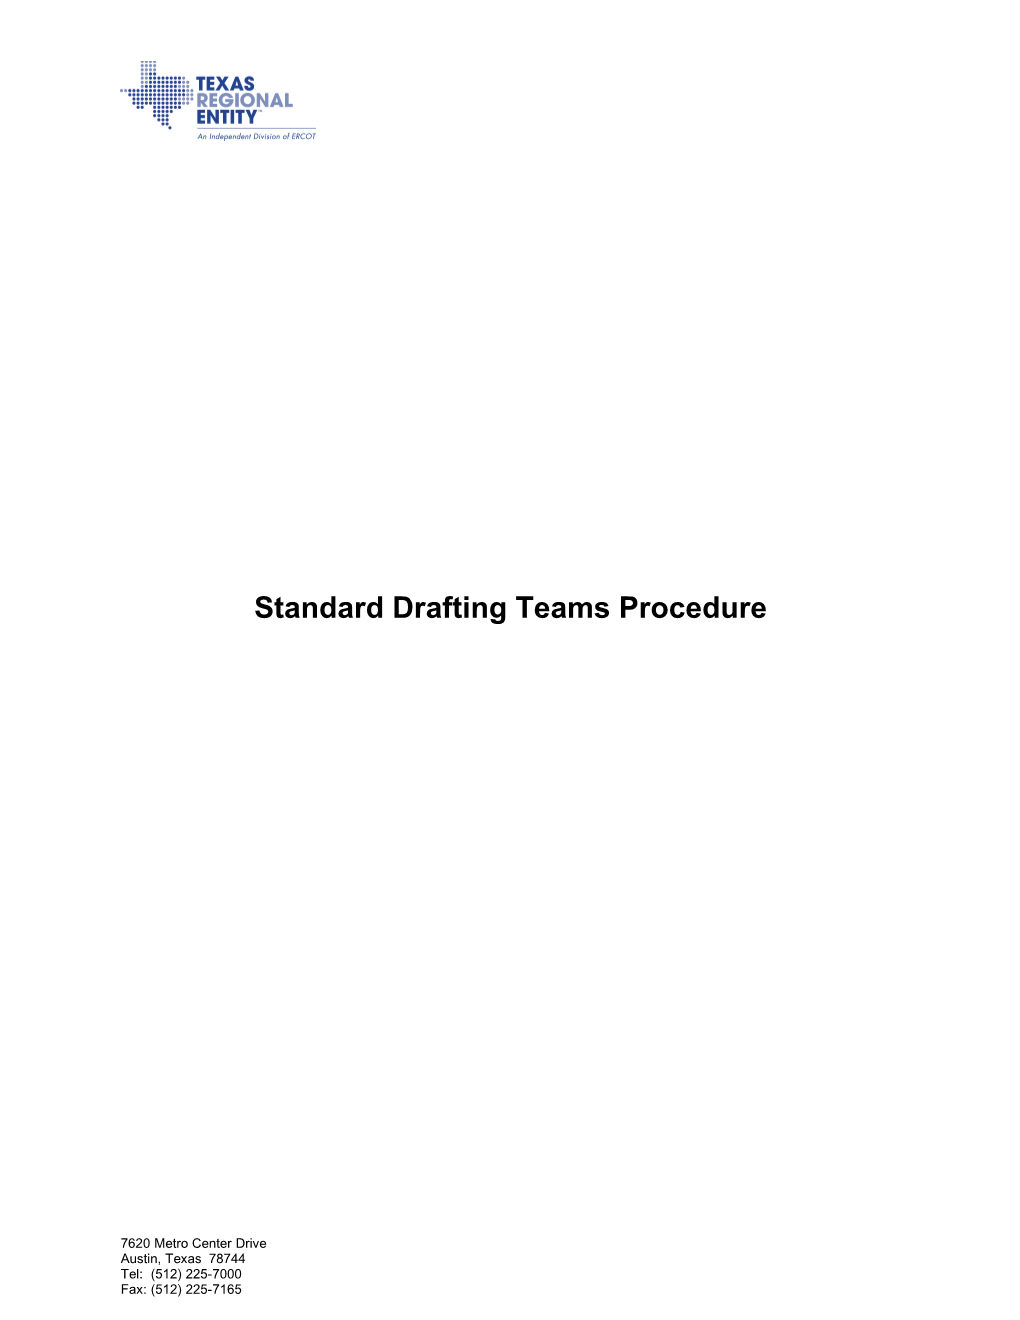 Standards Drafting Team Procedure